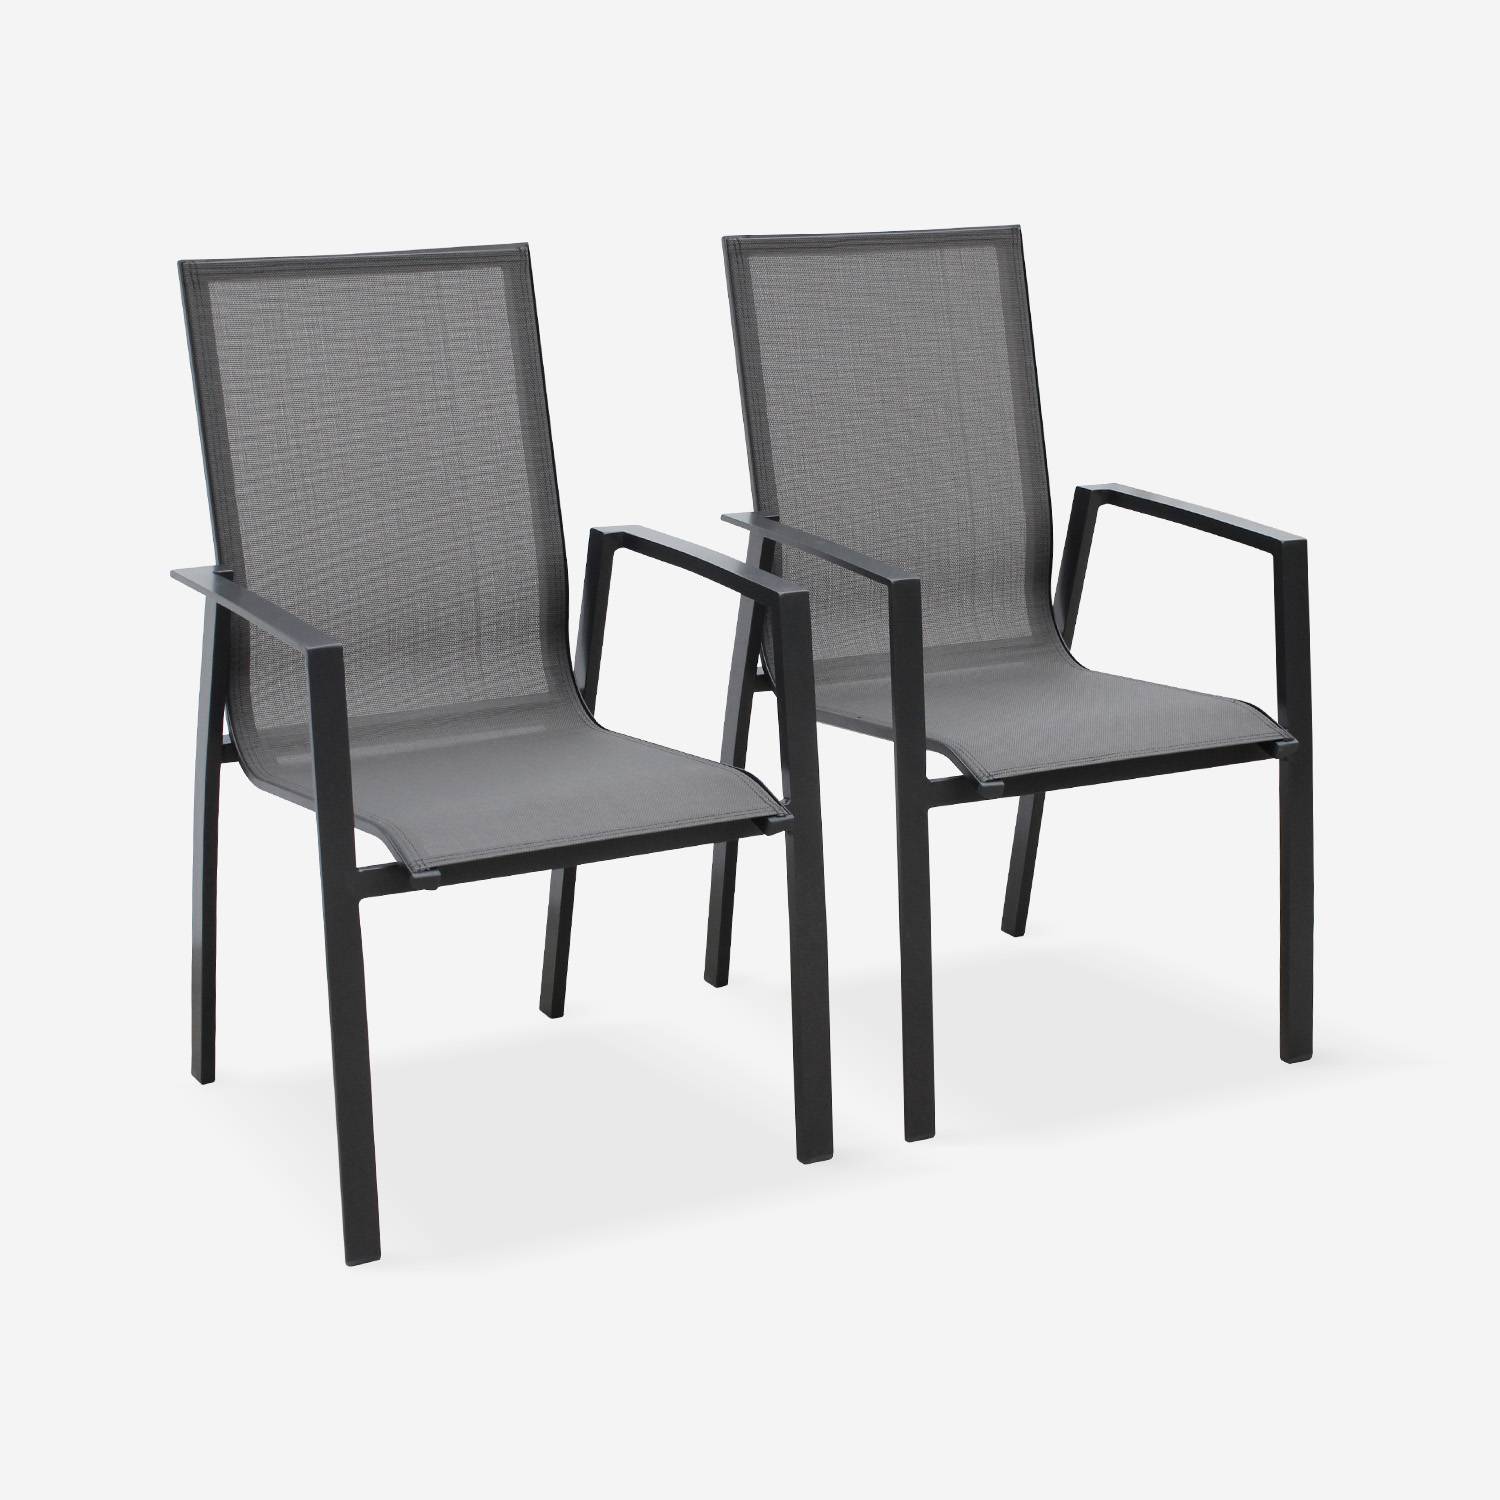 Juego de 2 sillas - Washington - Aluminio antracita y textileno gris oscuro, apilables,sweeek,Photo1